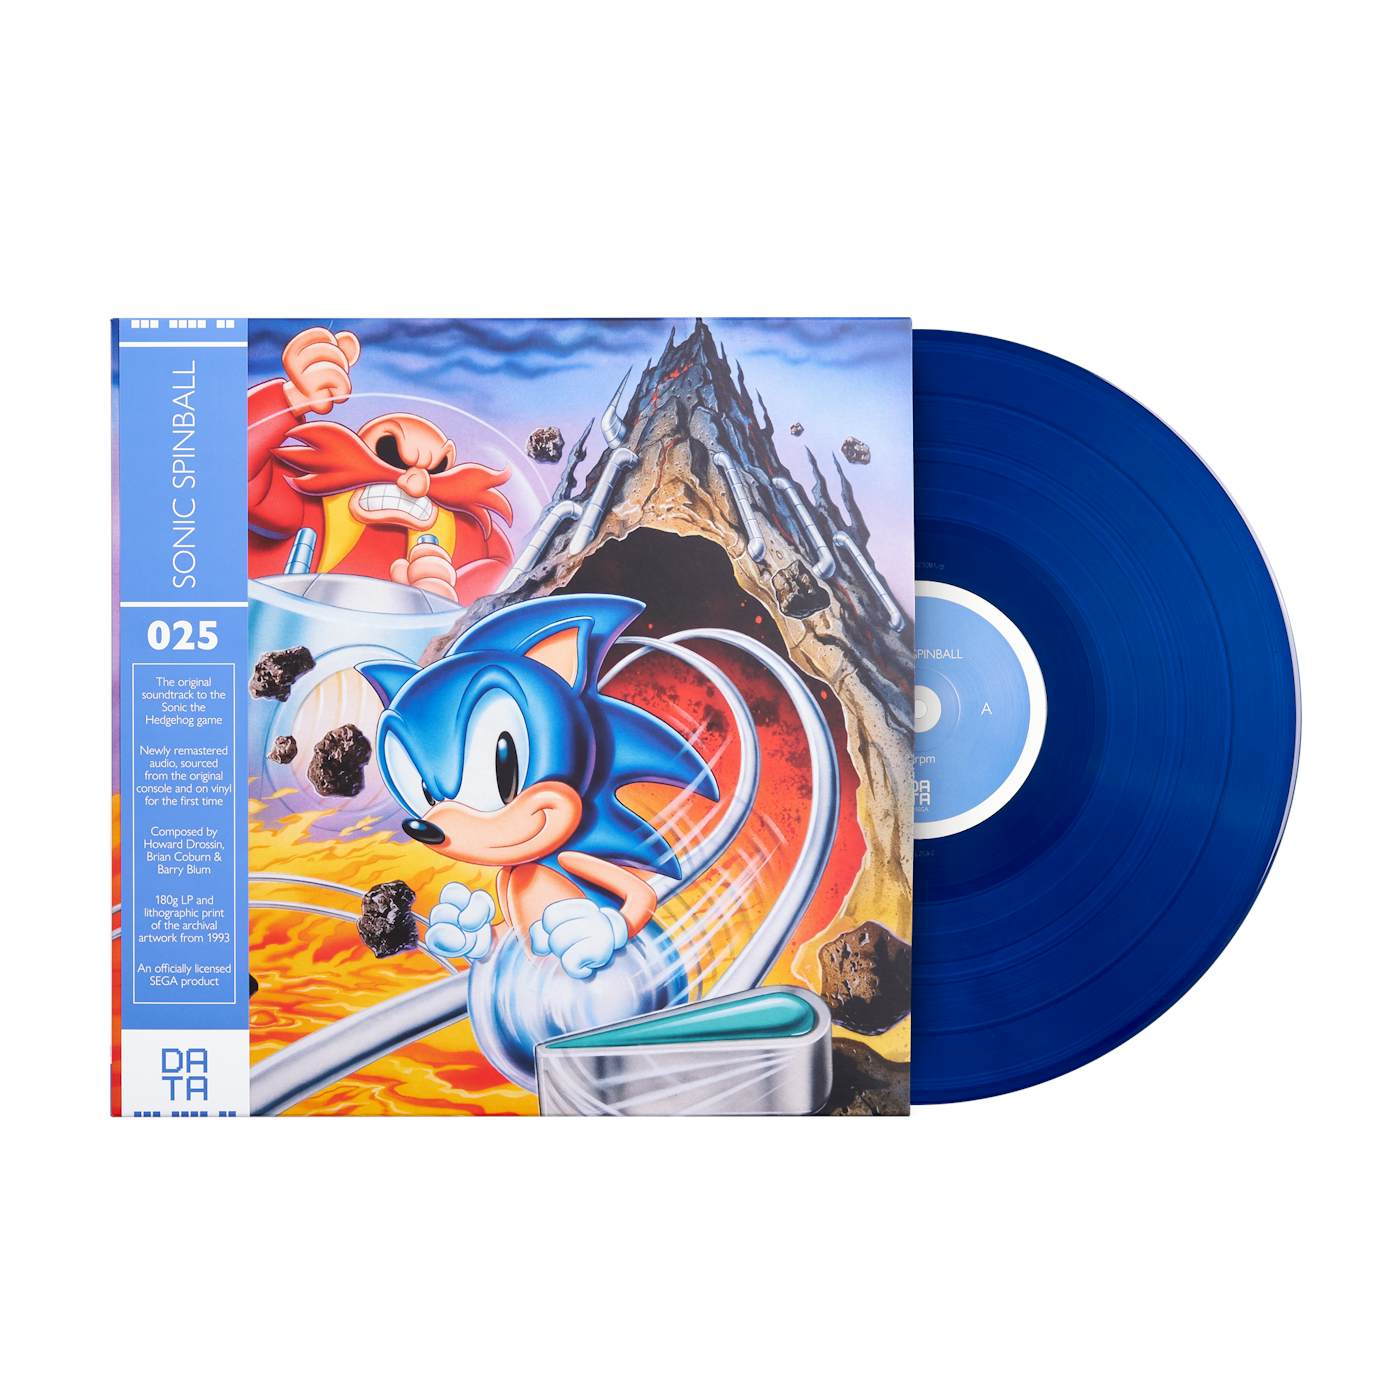 Sonic The Hedgehog 2 - Sonic (Sega Mega Drive) - POP! Game Covers